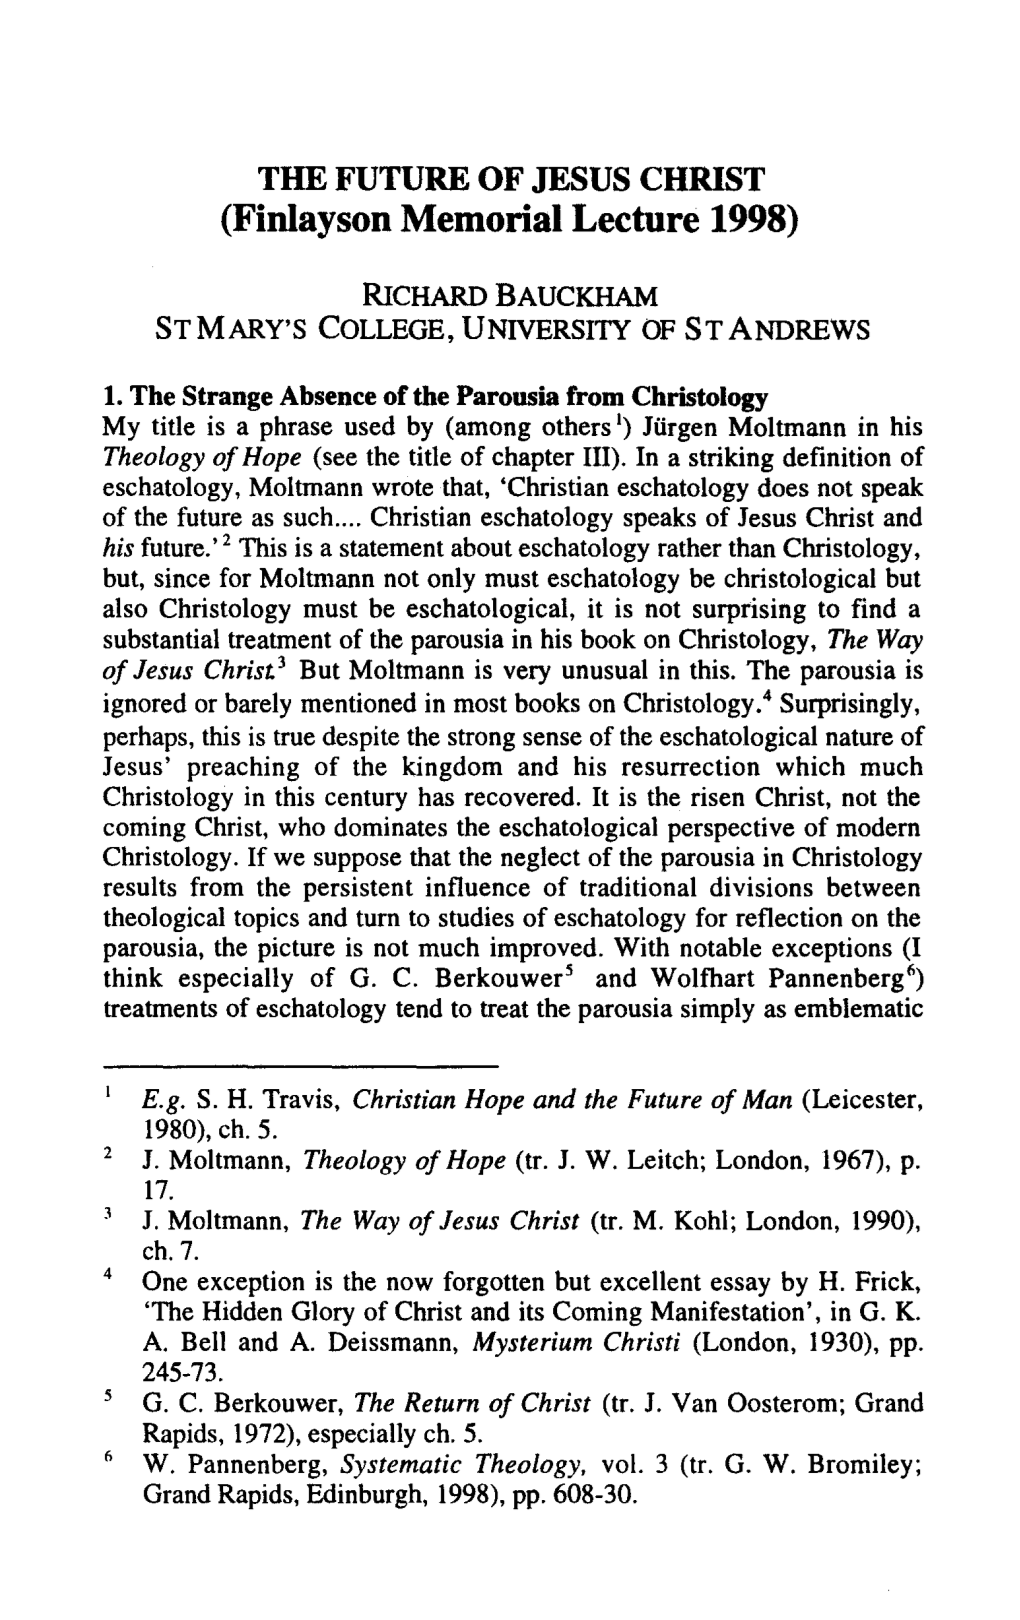 Richard Bauckham, "The Future of Jesus Christ," Scottish Bulletin of Evangelical Theology 16.2 (Autumn 1998): 97-110